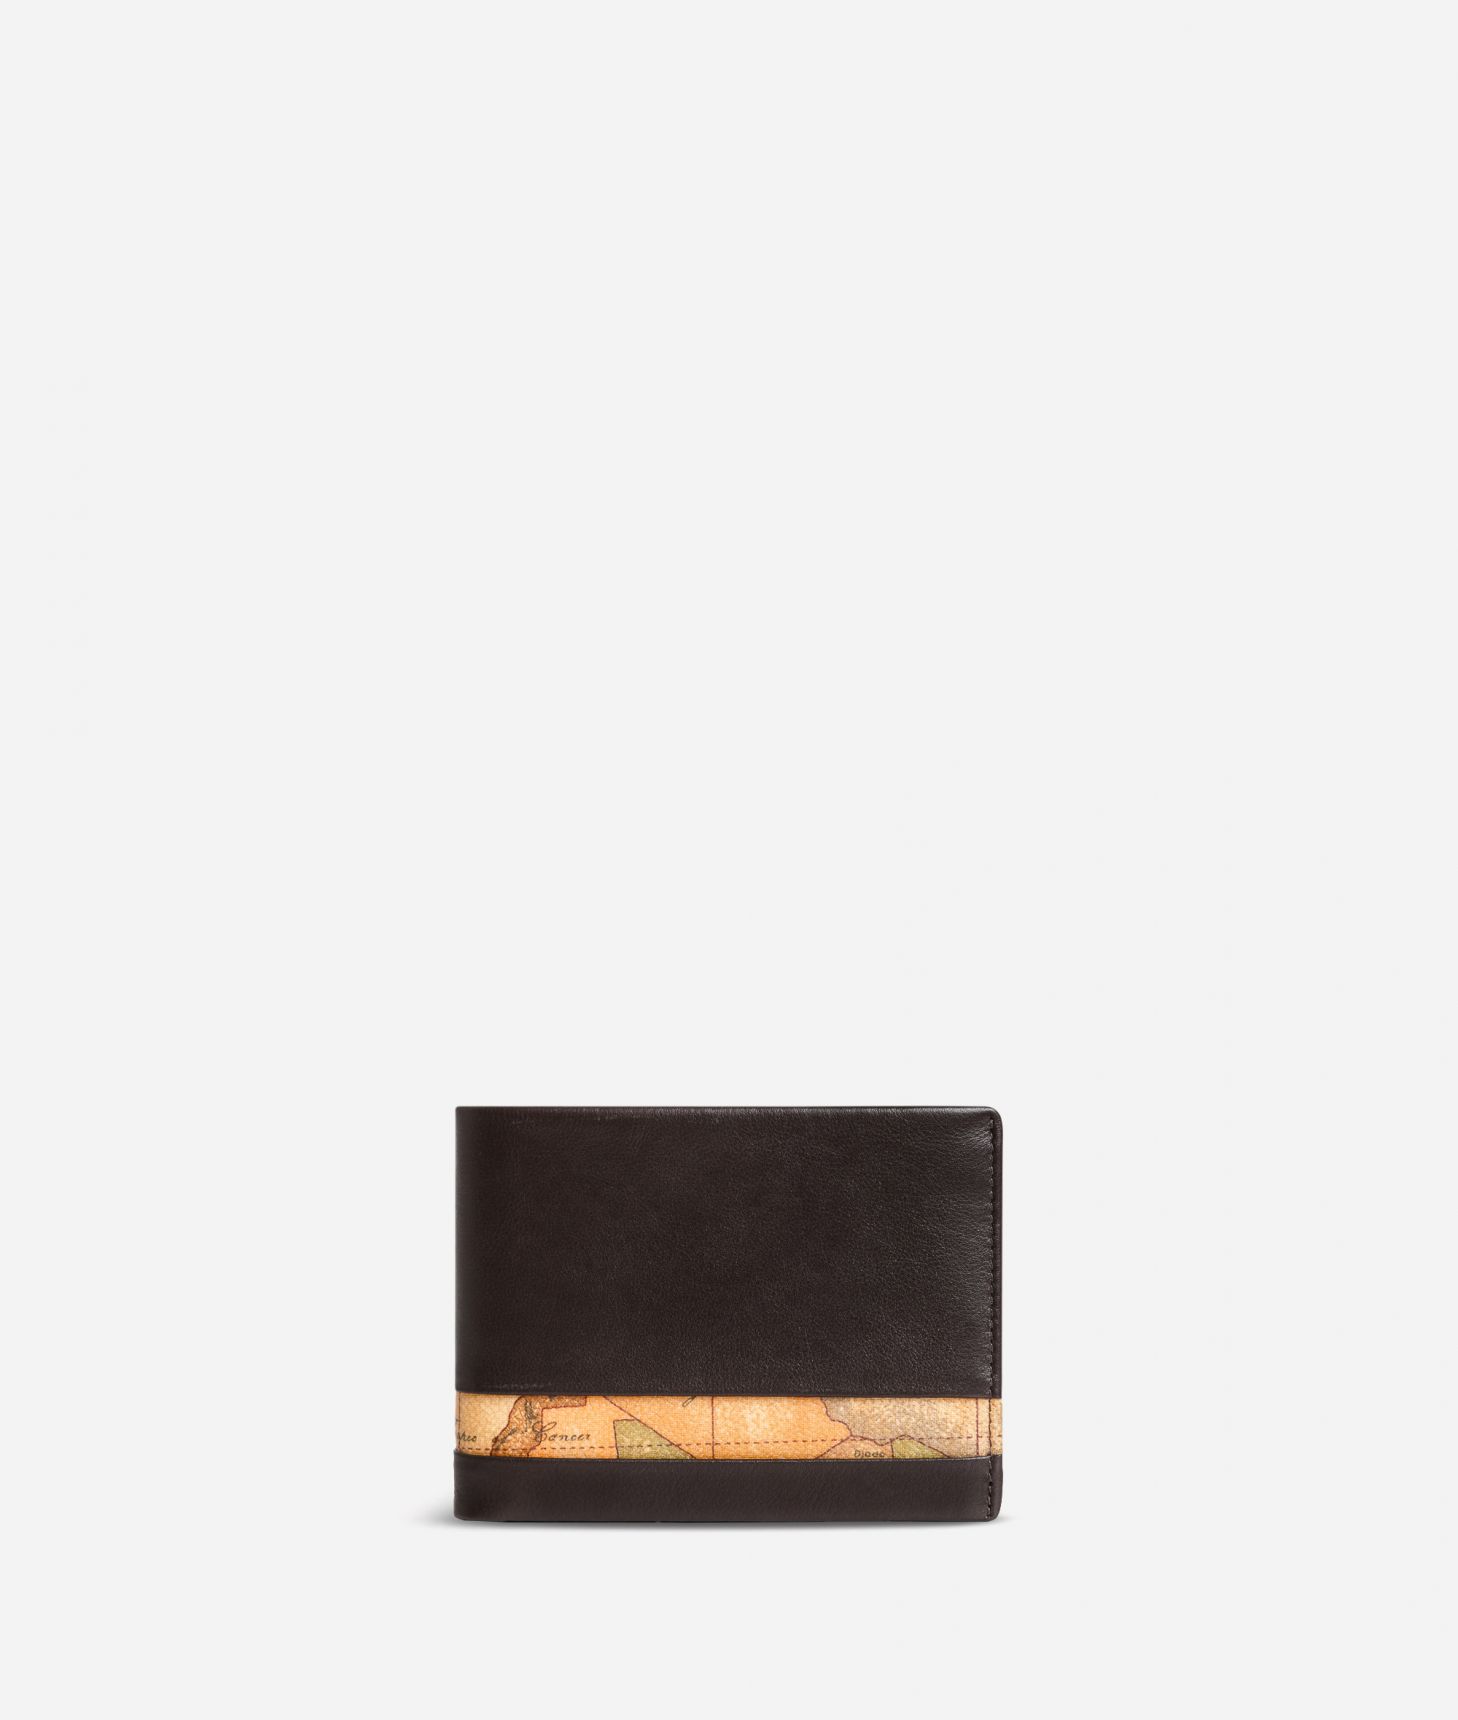 Medium leather wallet Geo Classic fabric trims,front